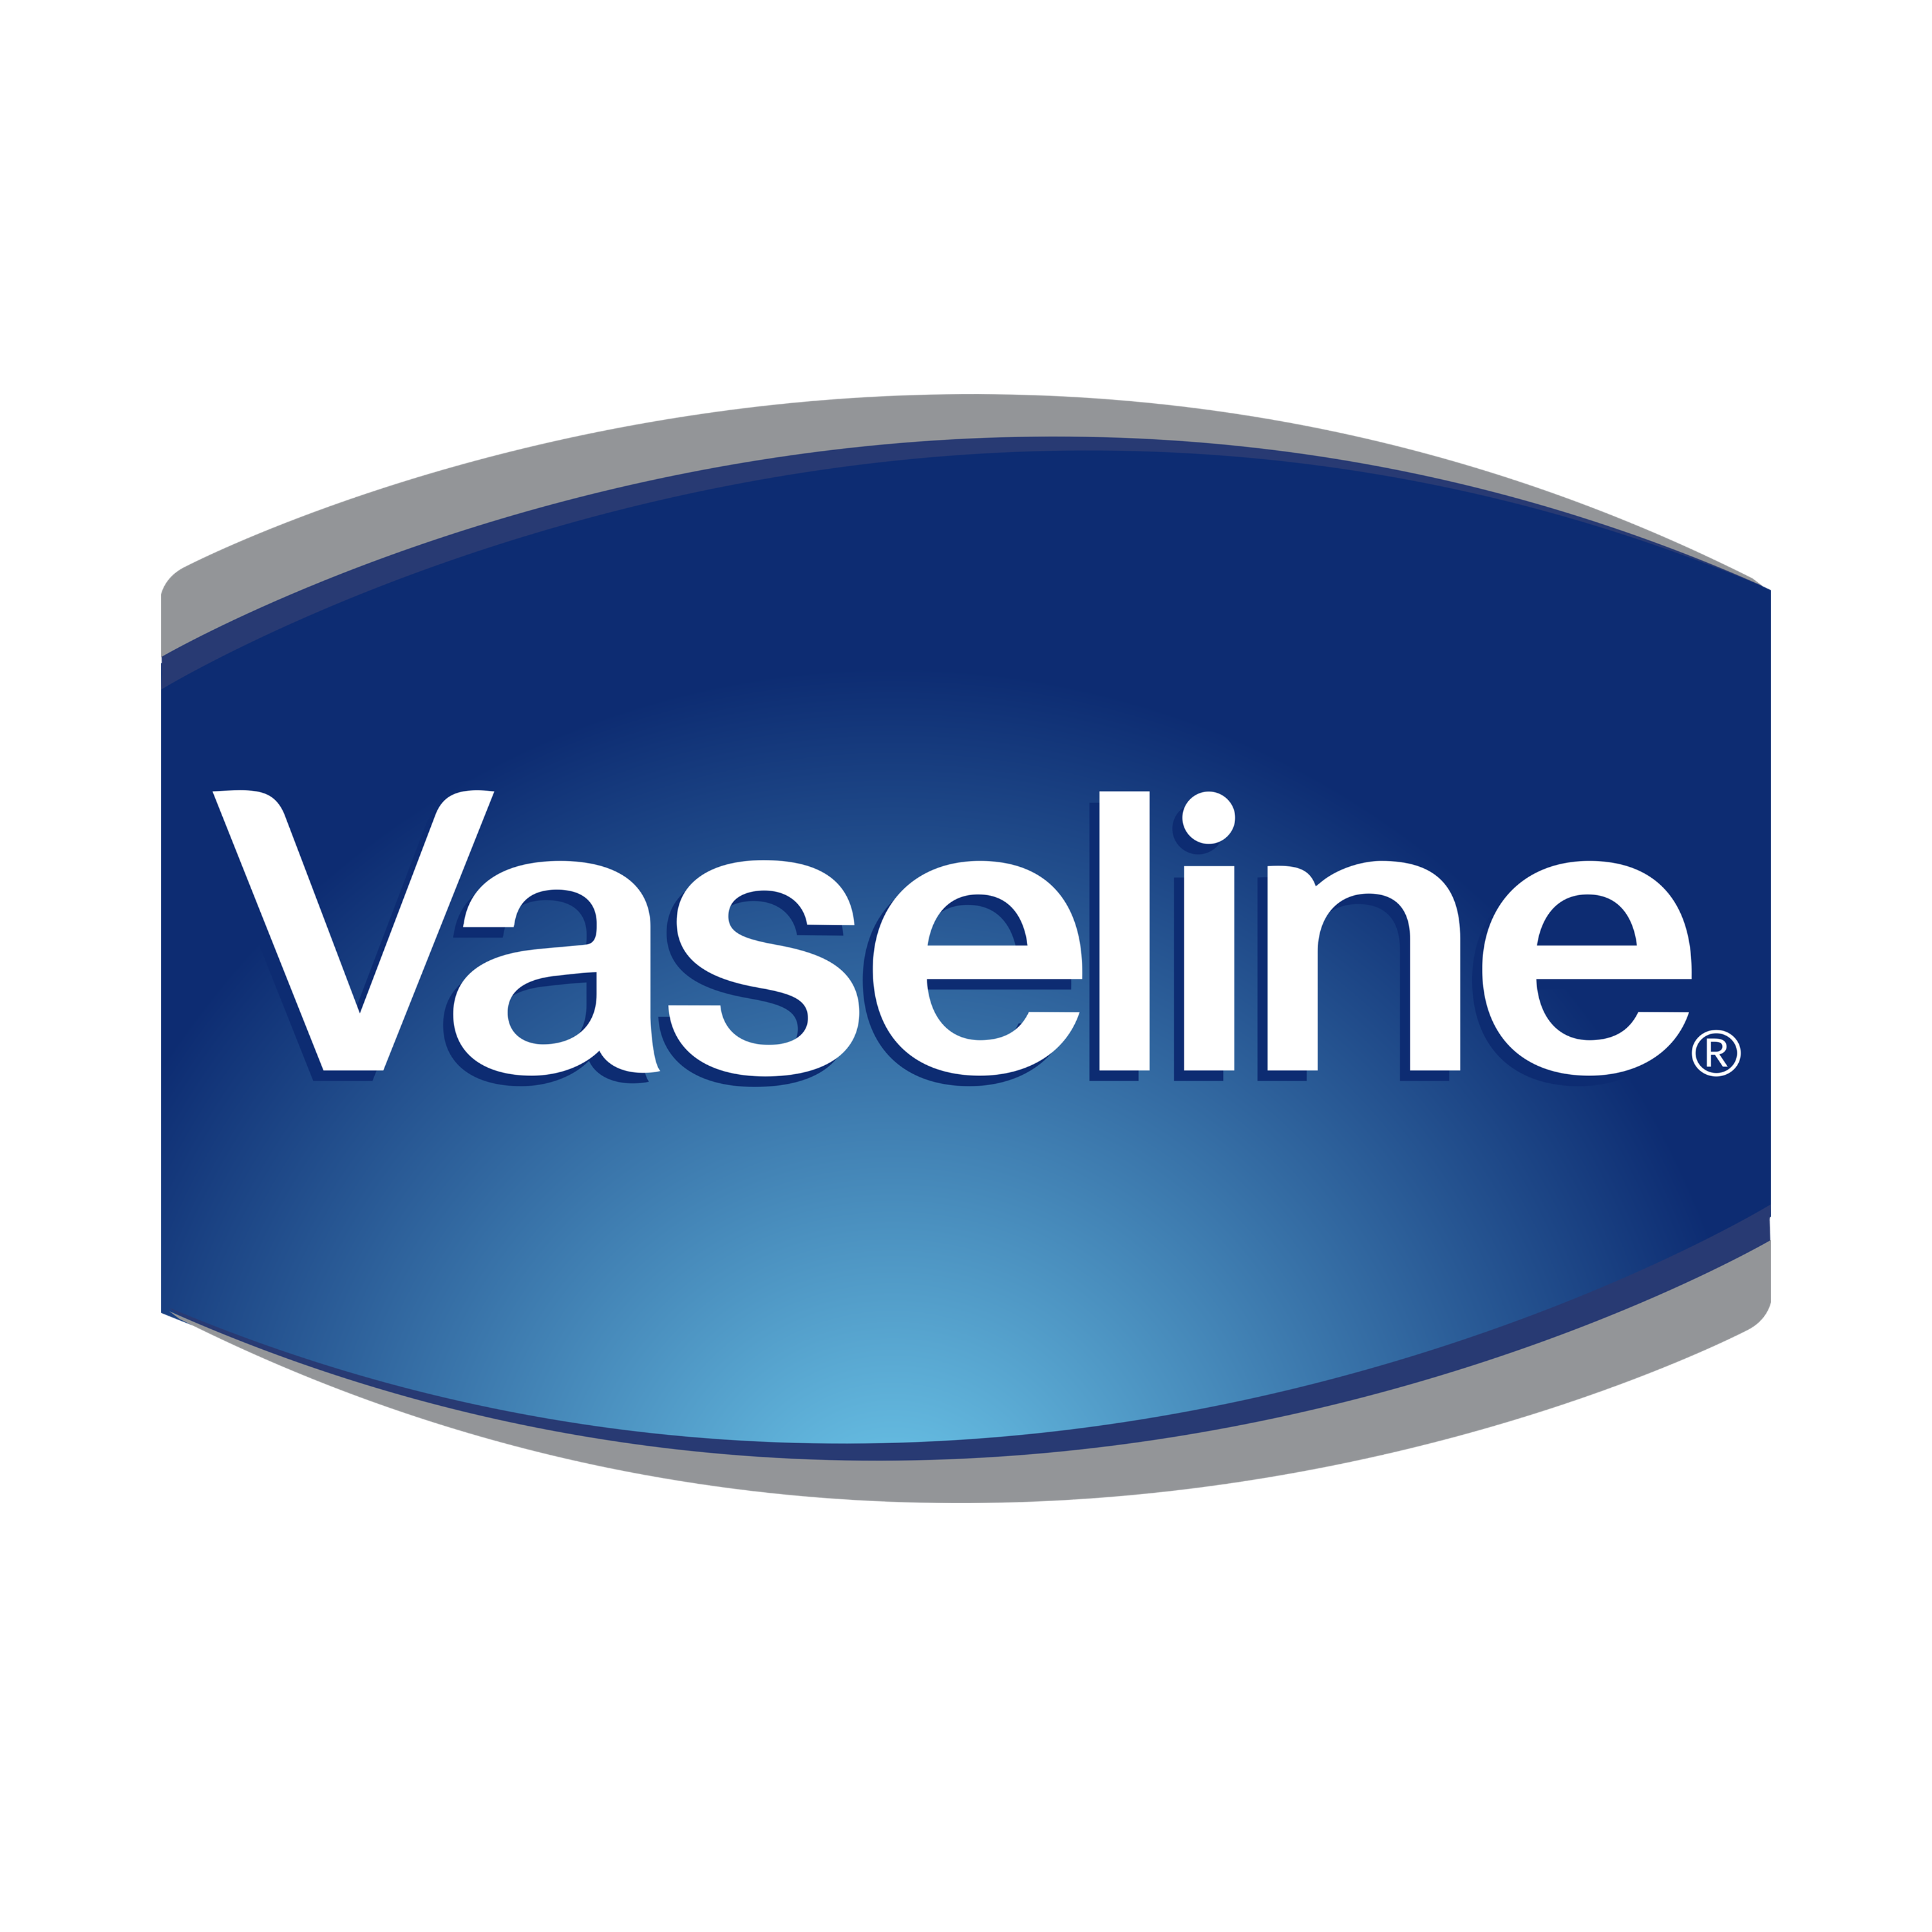 Vaseline Logo Transparent Picture